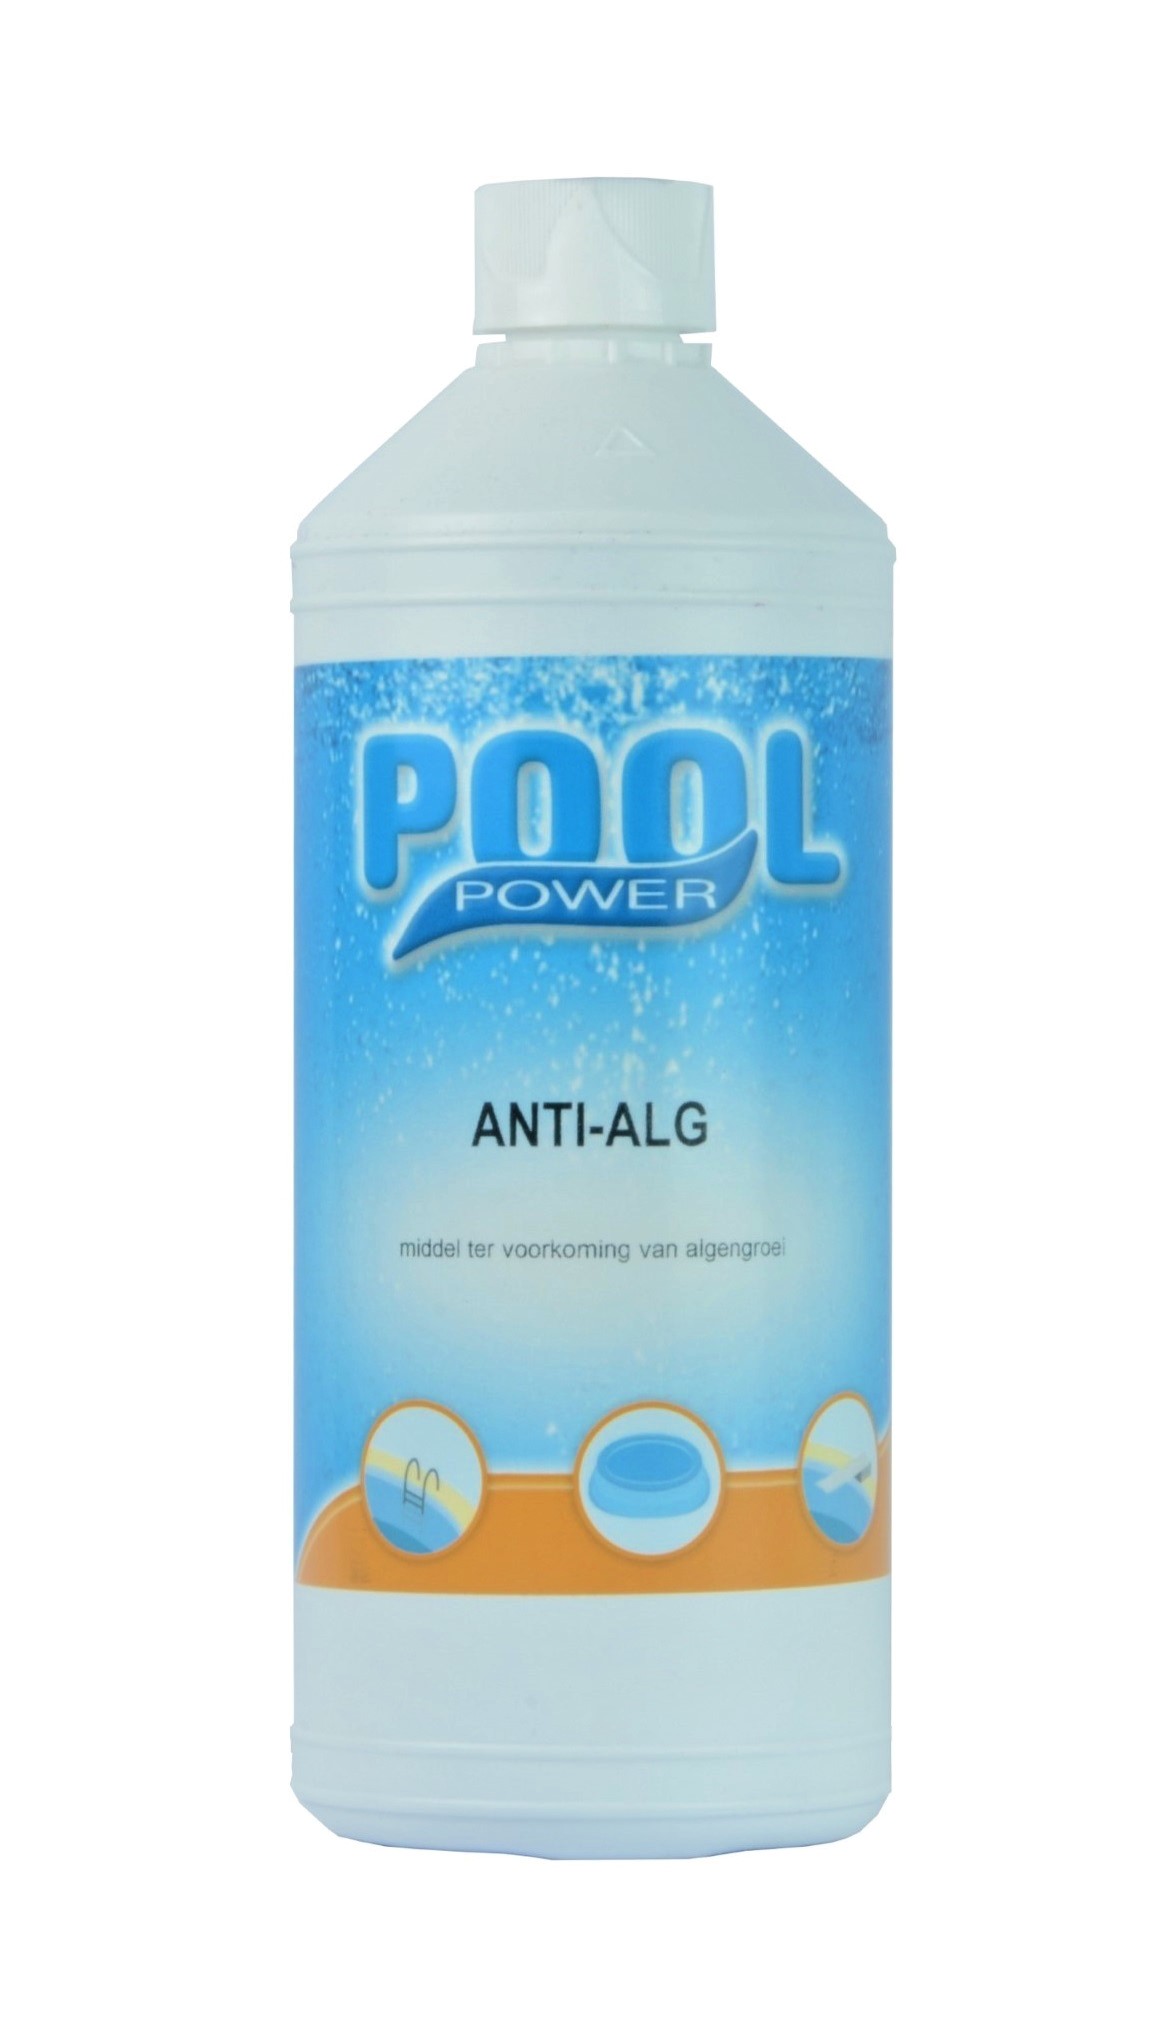 Pool power anti-alg 1ltr